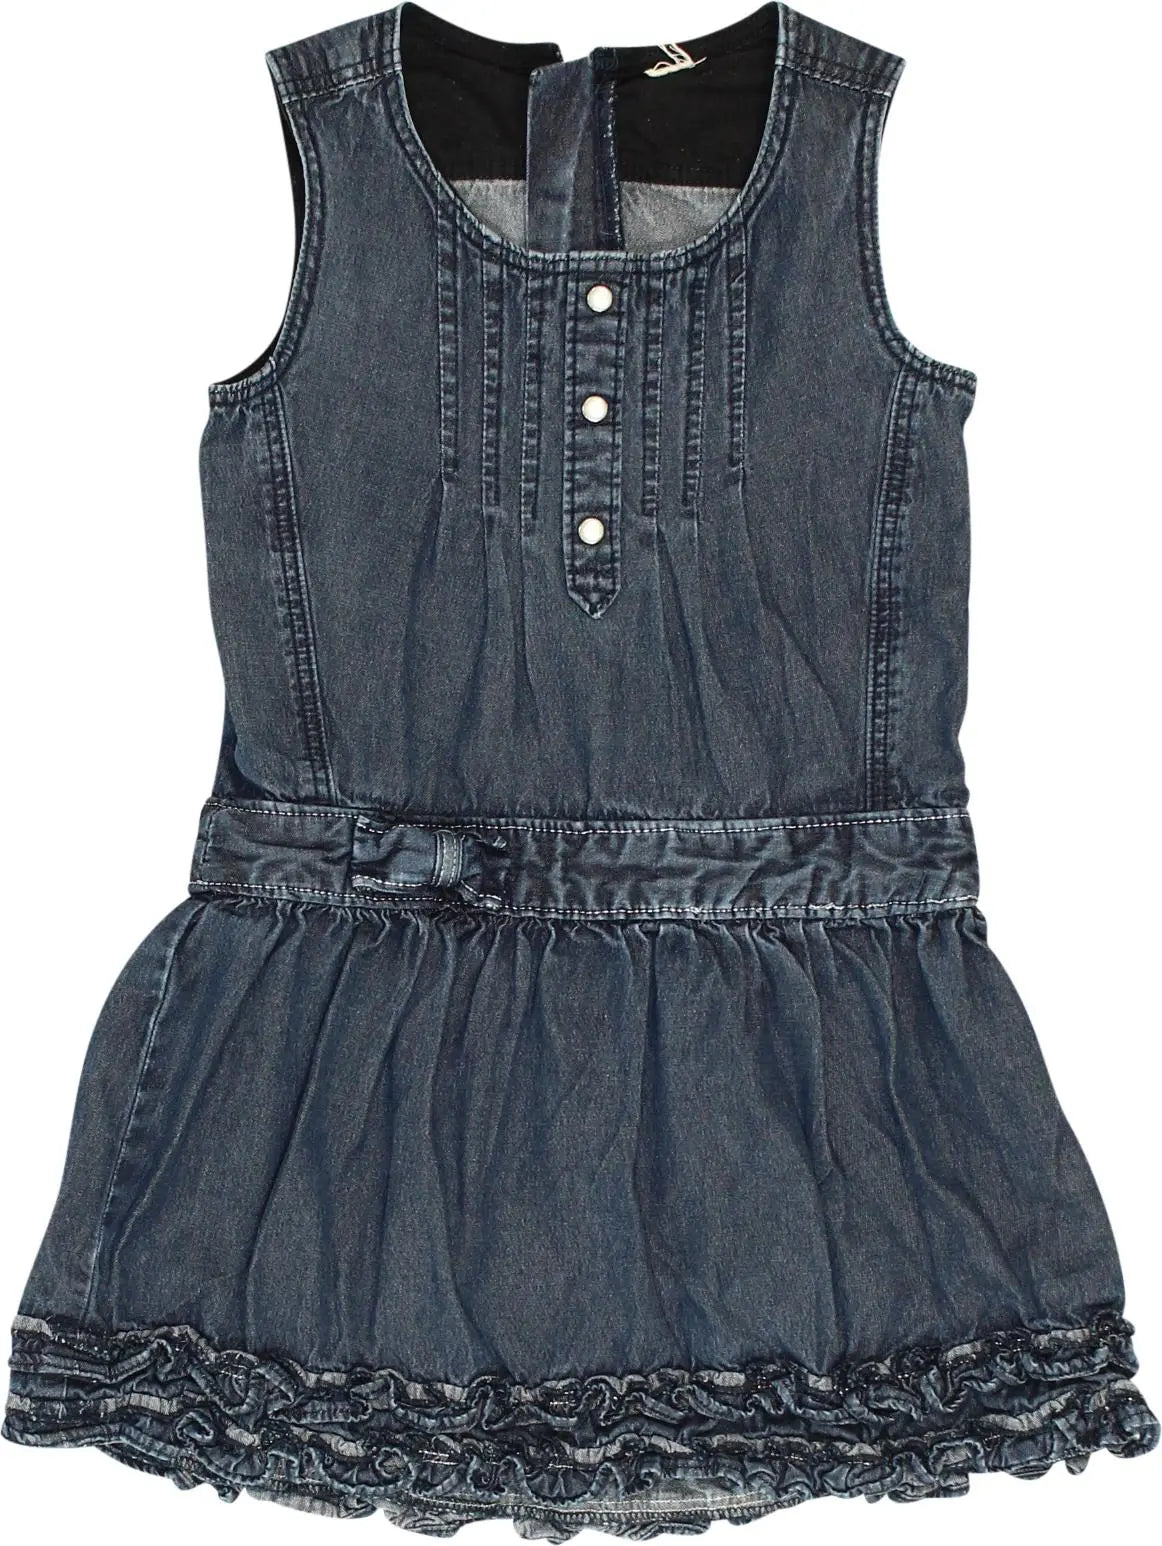 H&M - Denim Dress- ThriftTale.com - Vintage and second handclothing